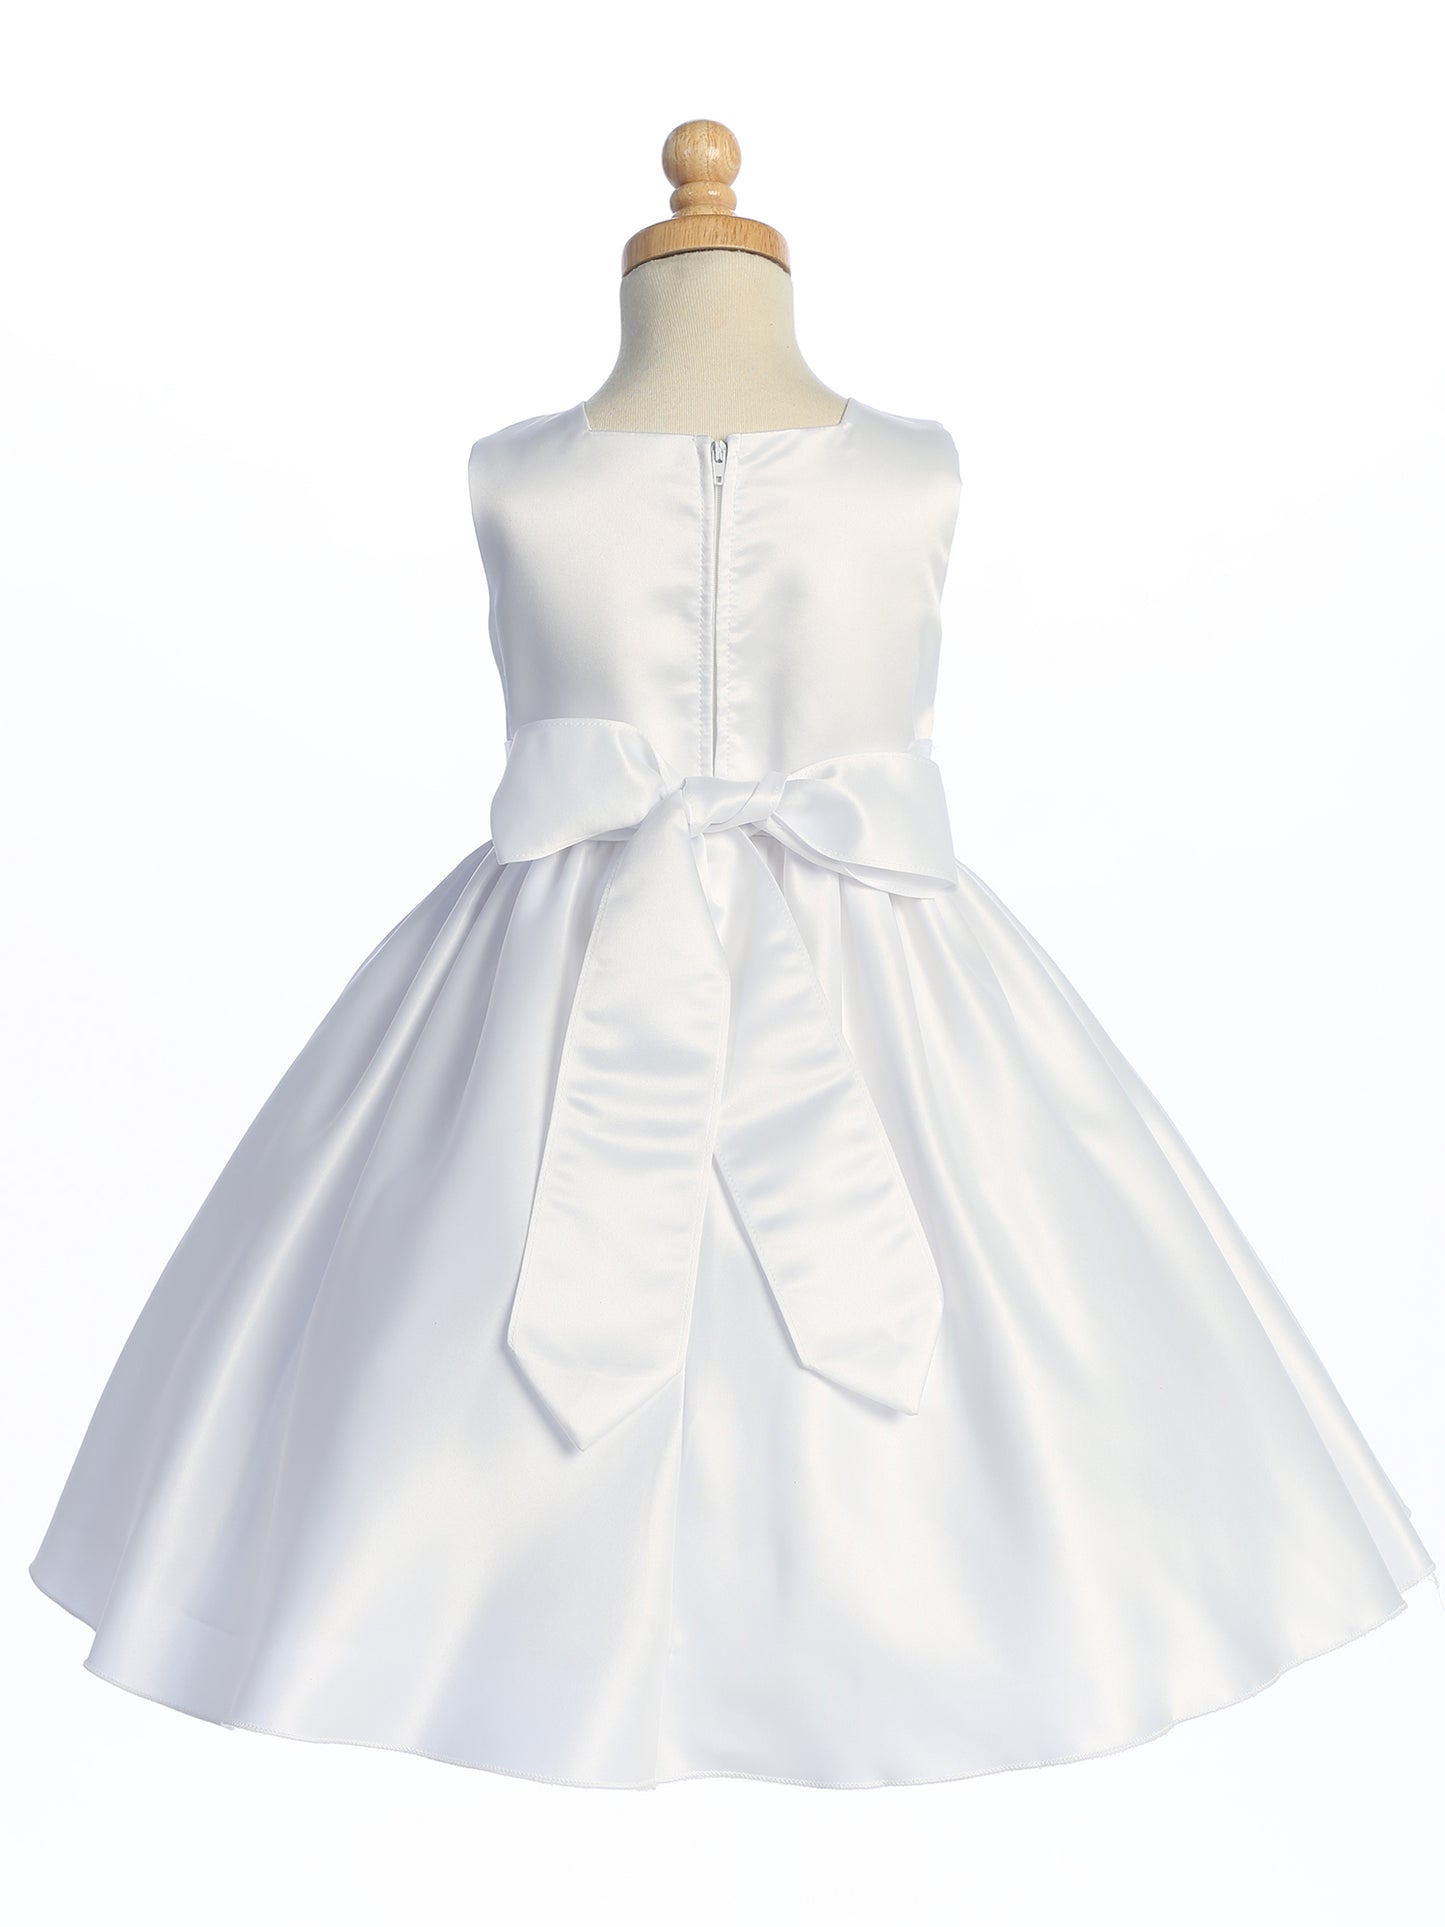 Satin Flower Girl Dress with Bow - White - BL257-WHI